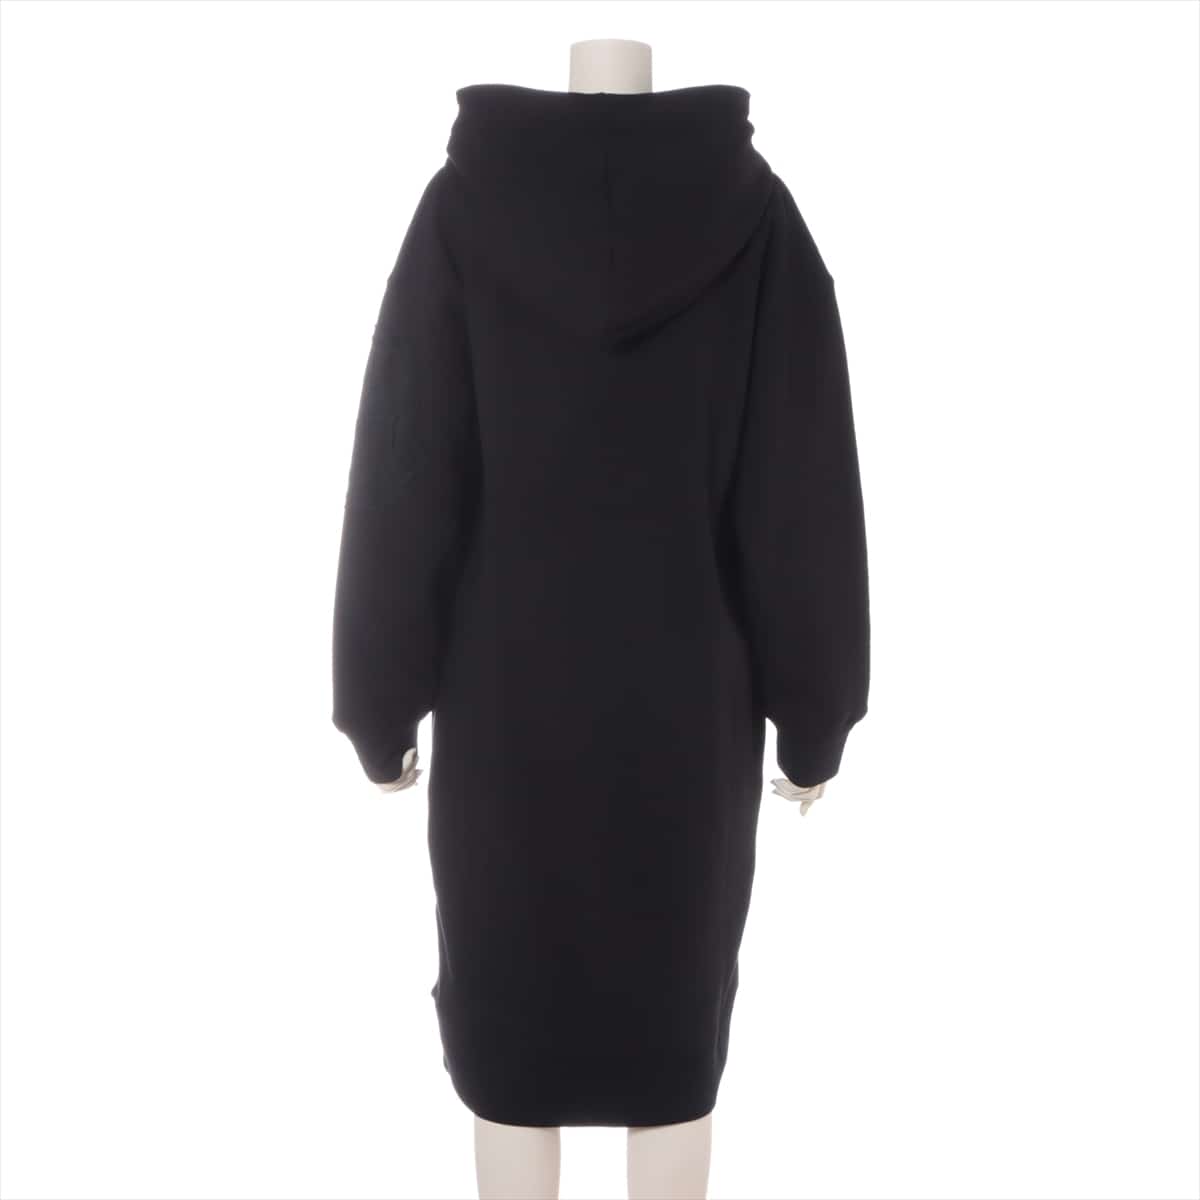 Moncler ABITO 20 years Cotton & nylon Dress L Ladies' Black